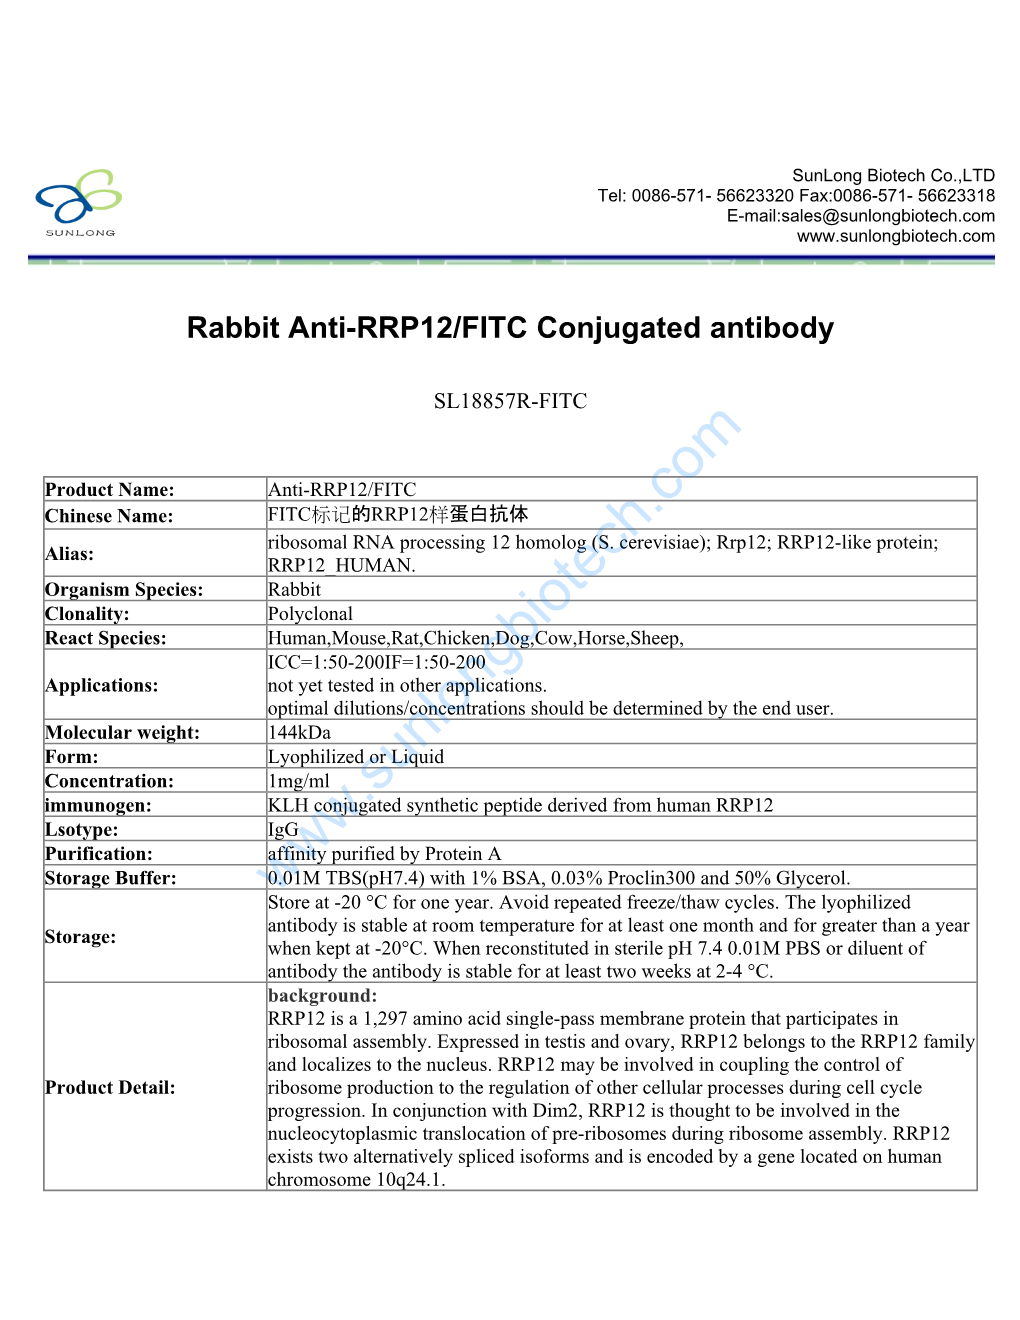 Rabbit Anti-RRP12/FITC Conjugated Antibody